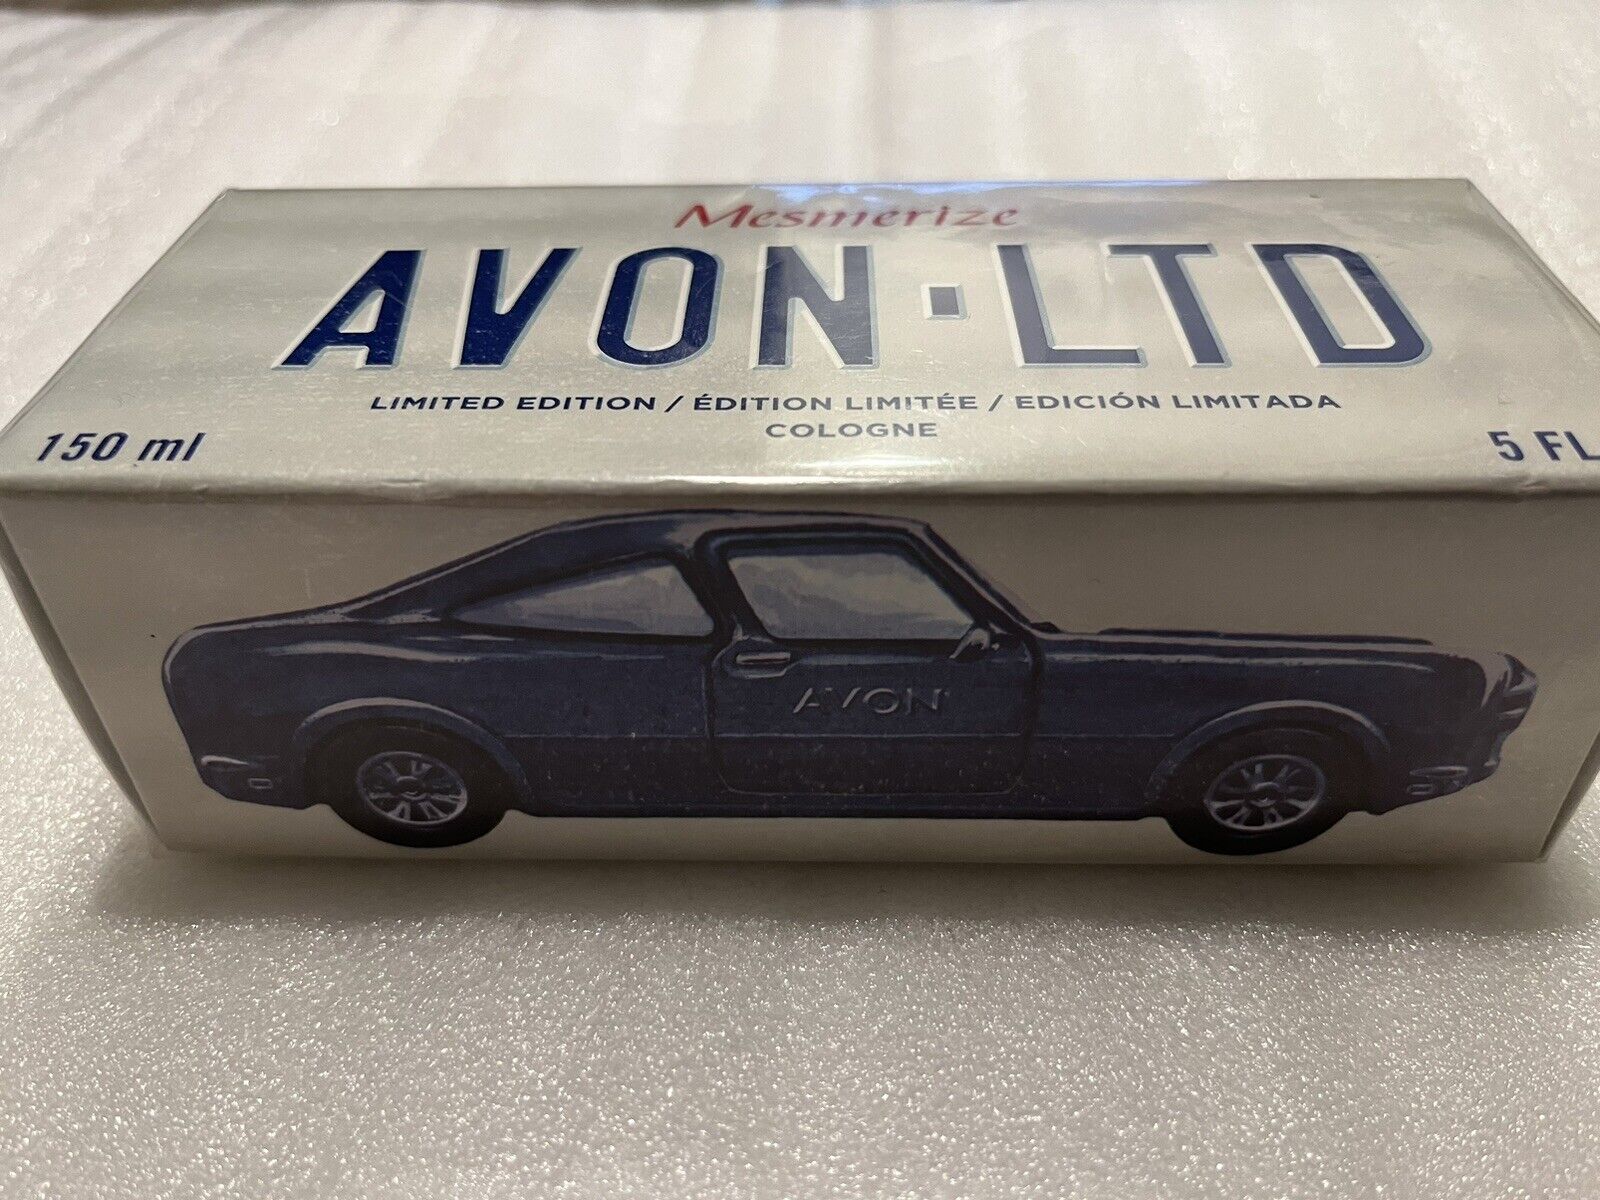 Avon LTD Mesmerize Blue Car Decanter 150 ml New in Carton Vintage